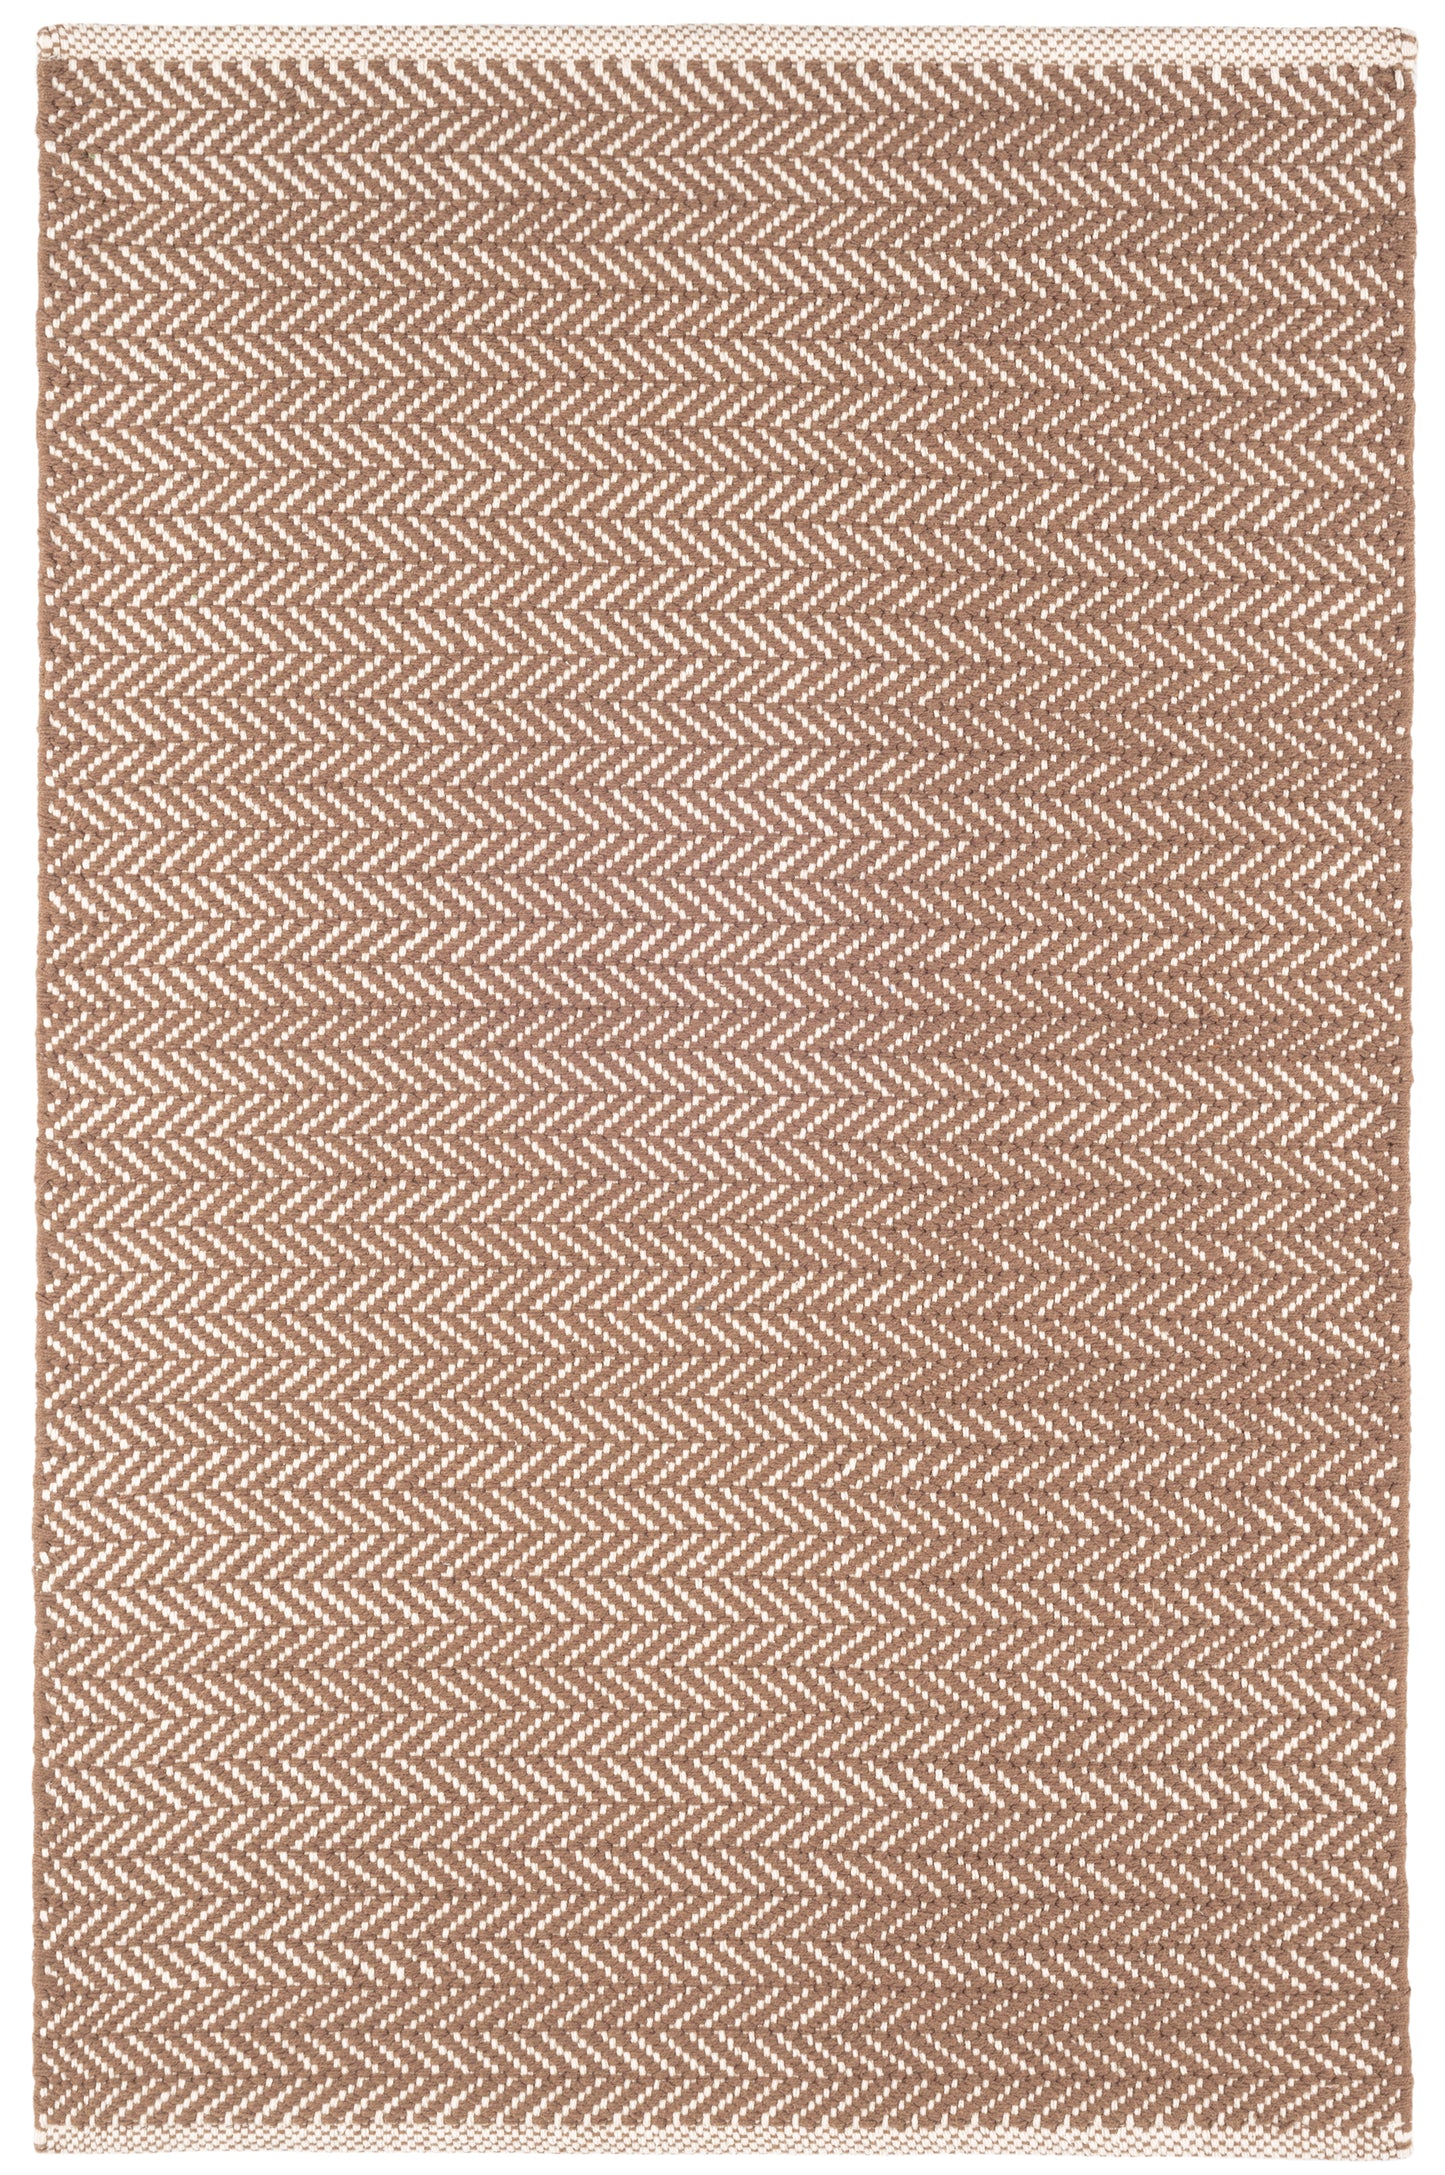 Rug - Woven Cotton - Herringbone Stone